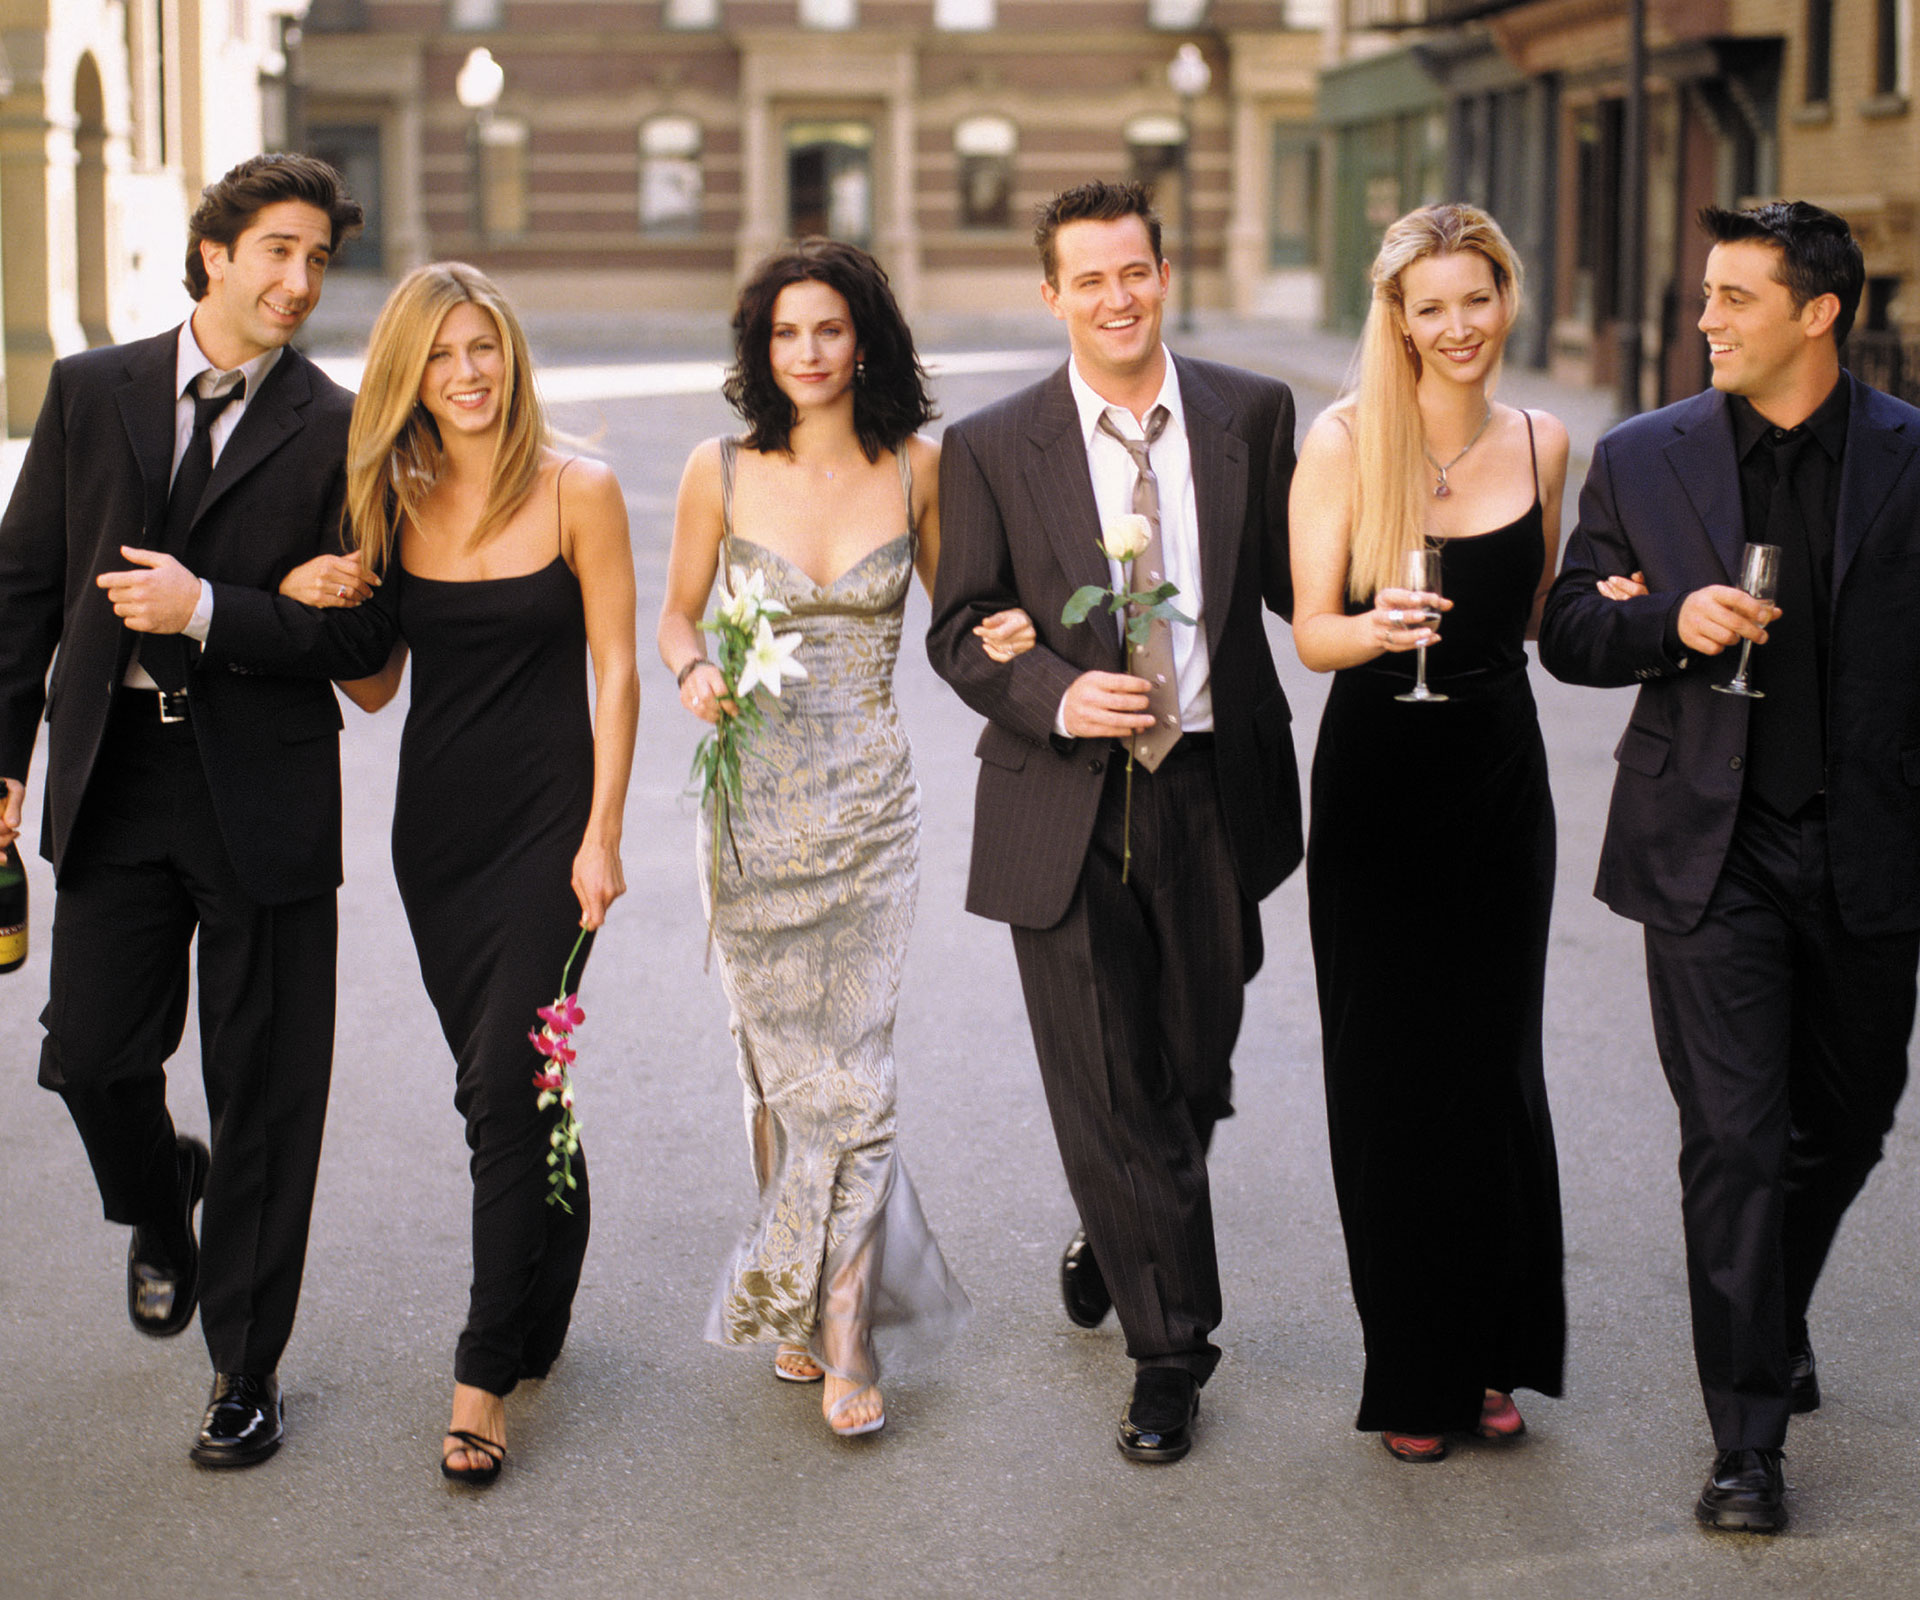 Jennifer Aniston, Courteney Cox, Lisa Kudrow, Matt LeBlanc, Matthew Perry, David Schwimmer in Friends